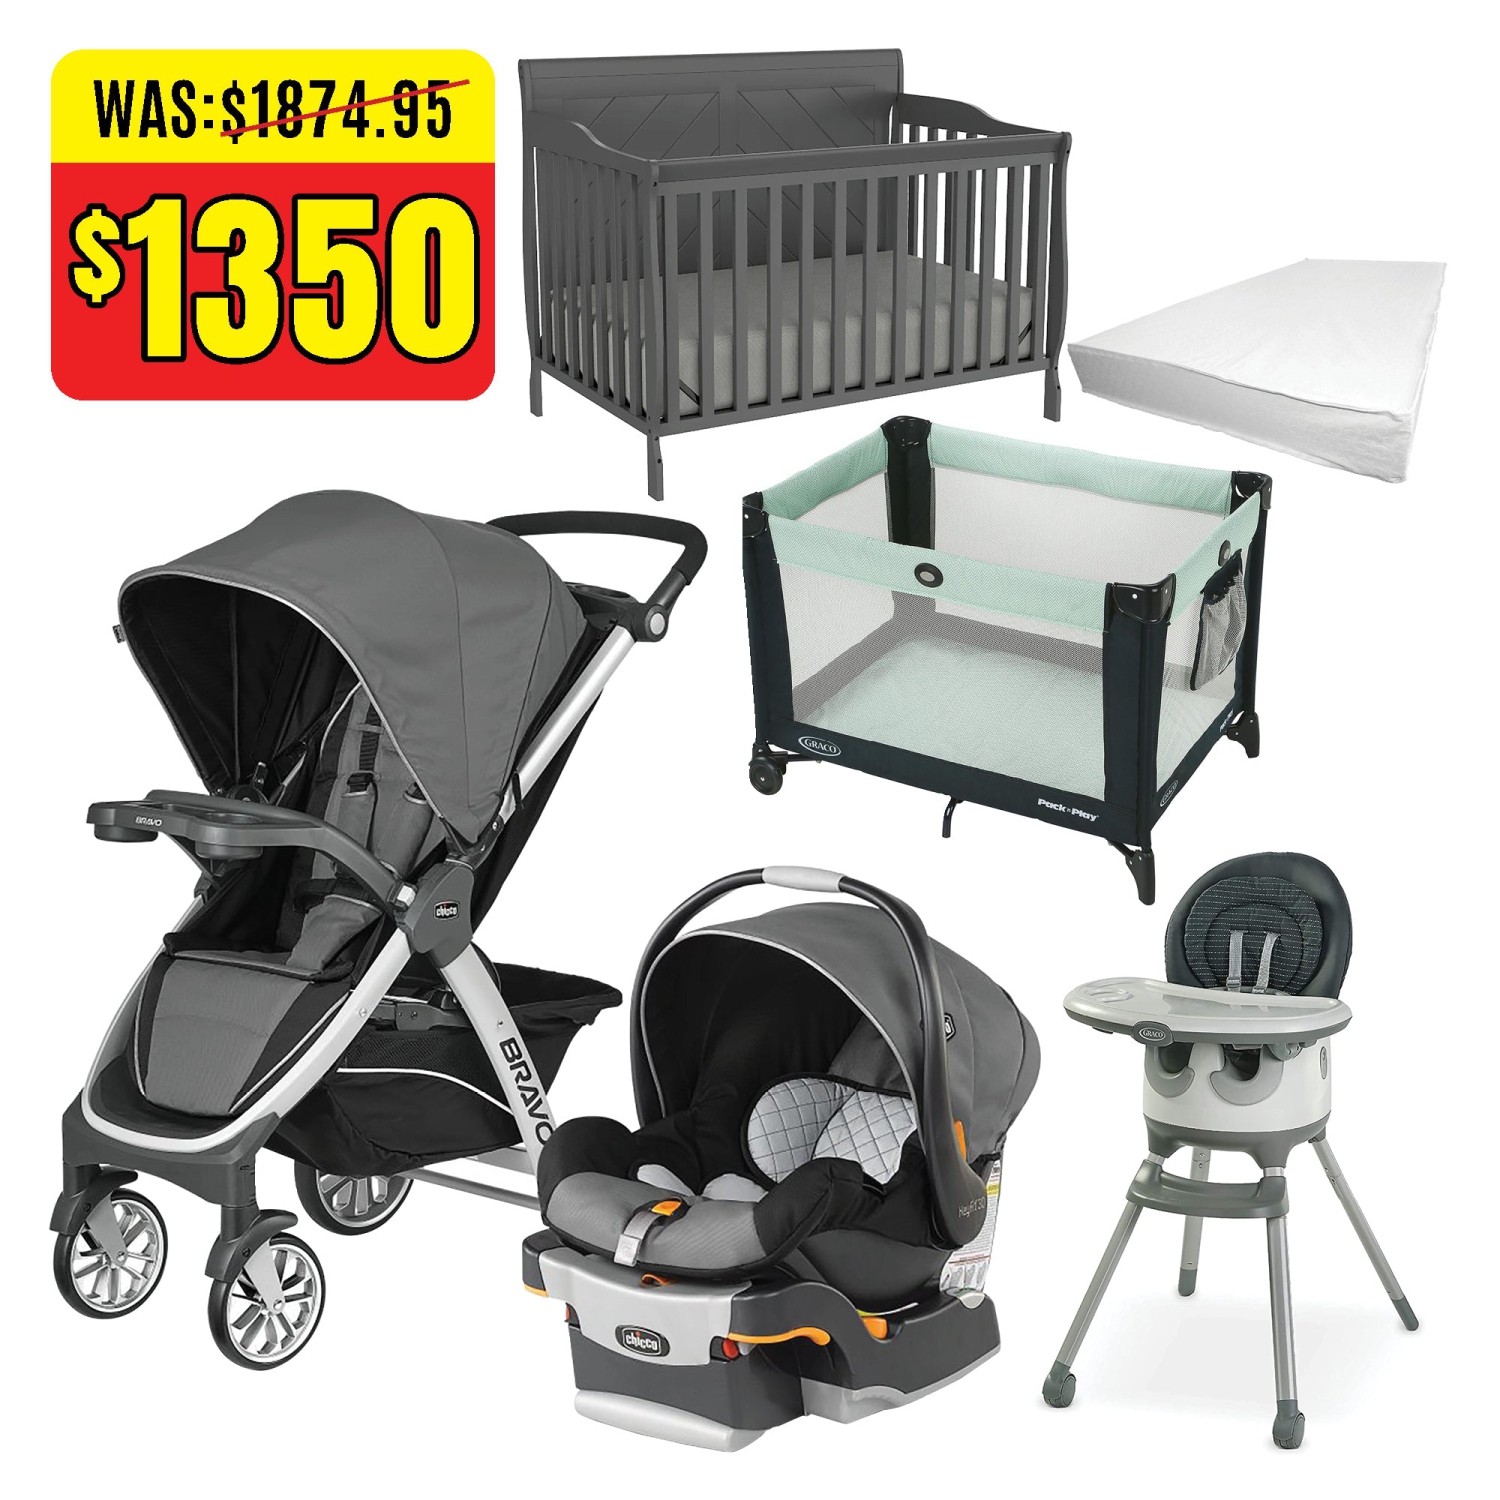 Bebelelo Baby Nursery Starter Kit 102 for Infant, chicco bravo stroller, graco baby high chair, graco playard